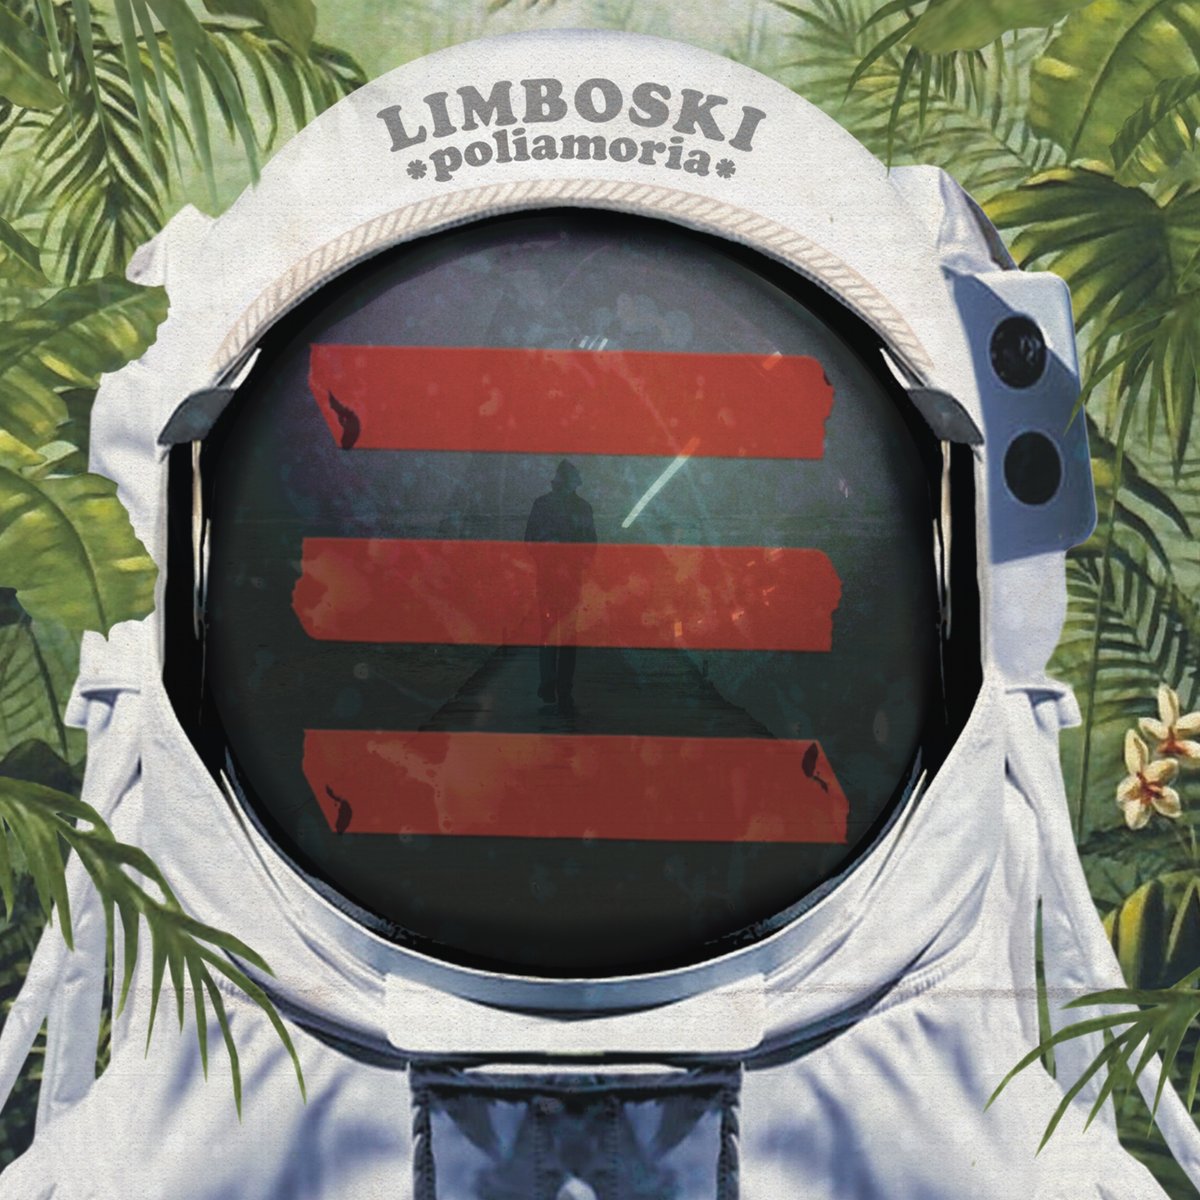 Limboski - Poliamoria